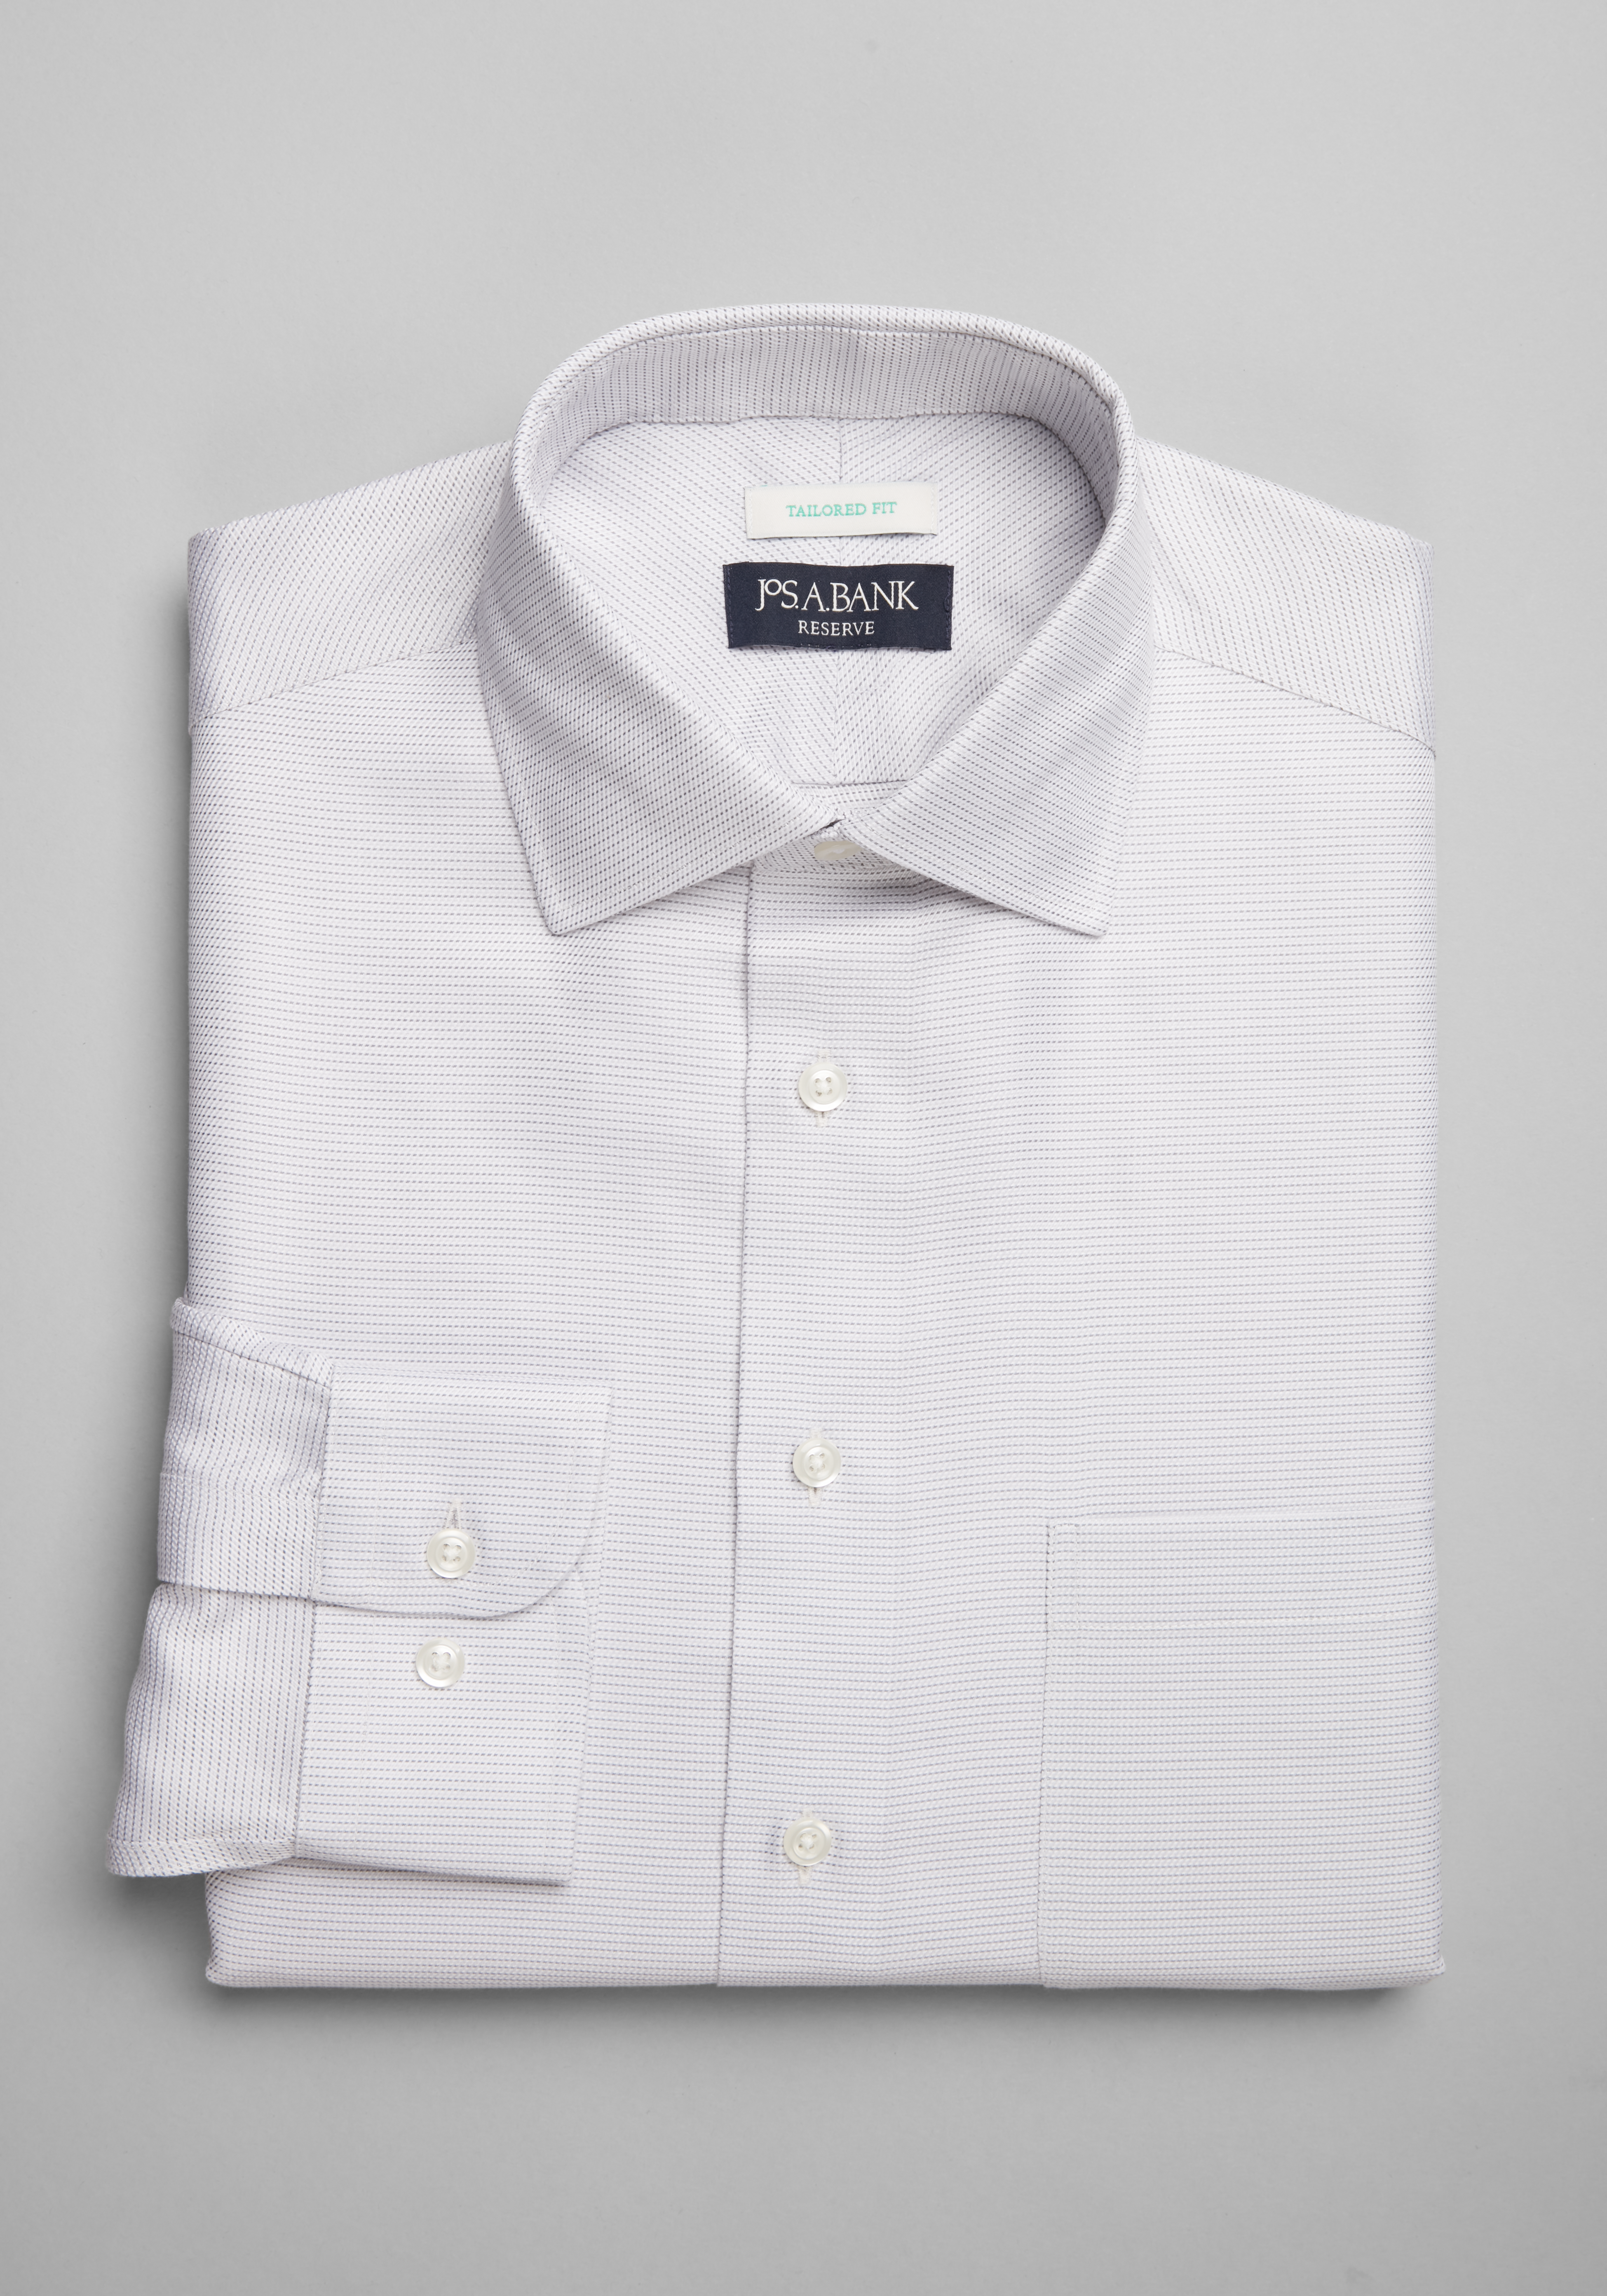 8 Classic Shirts For Men ideas  classic shirt, men, mens shirts